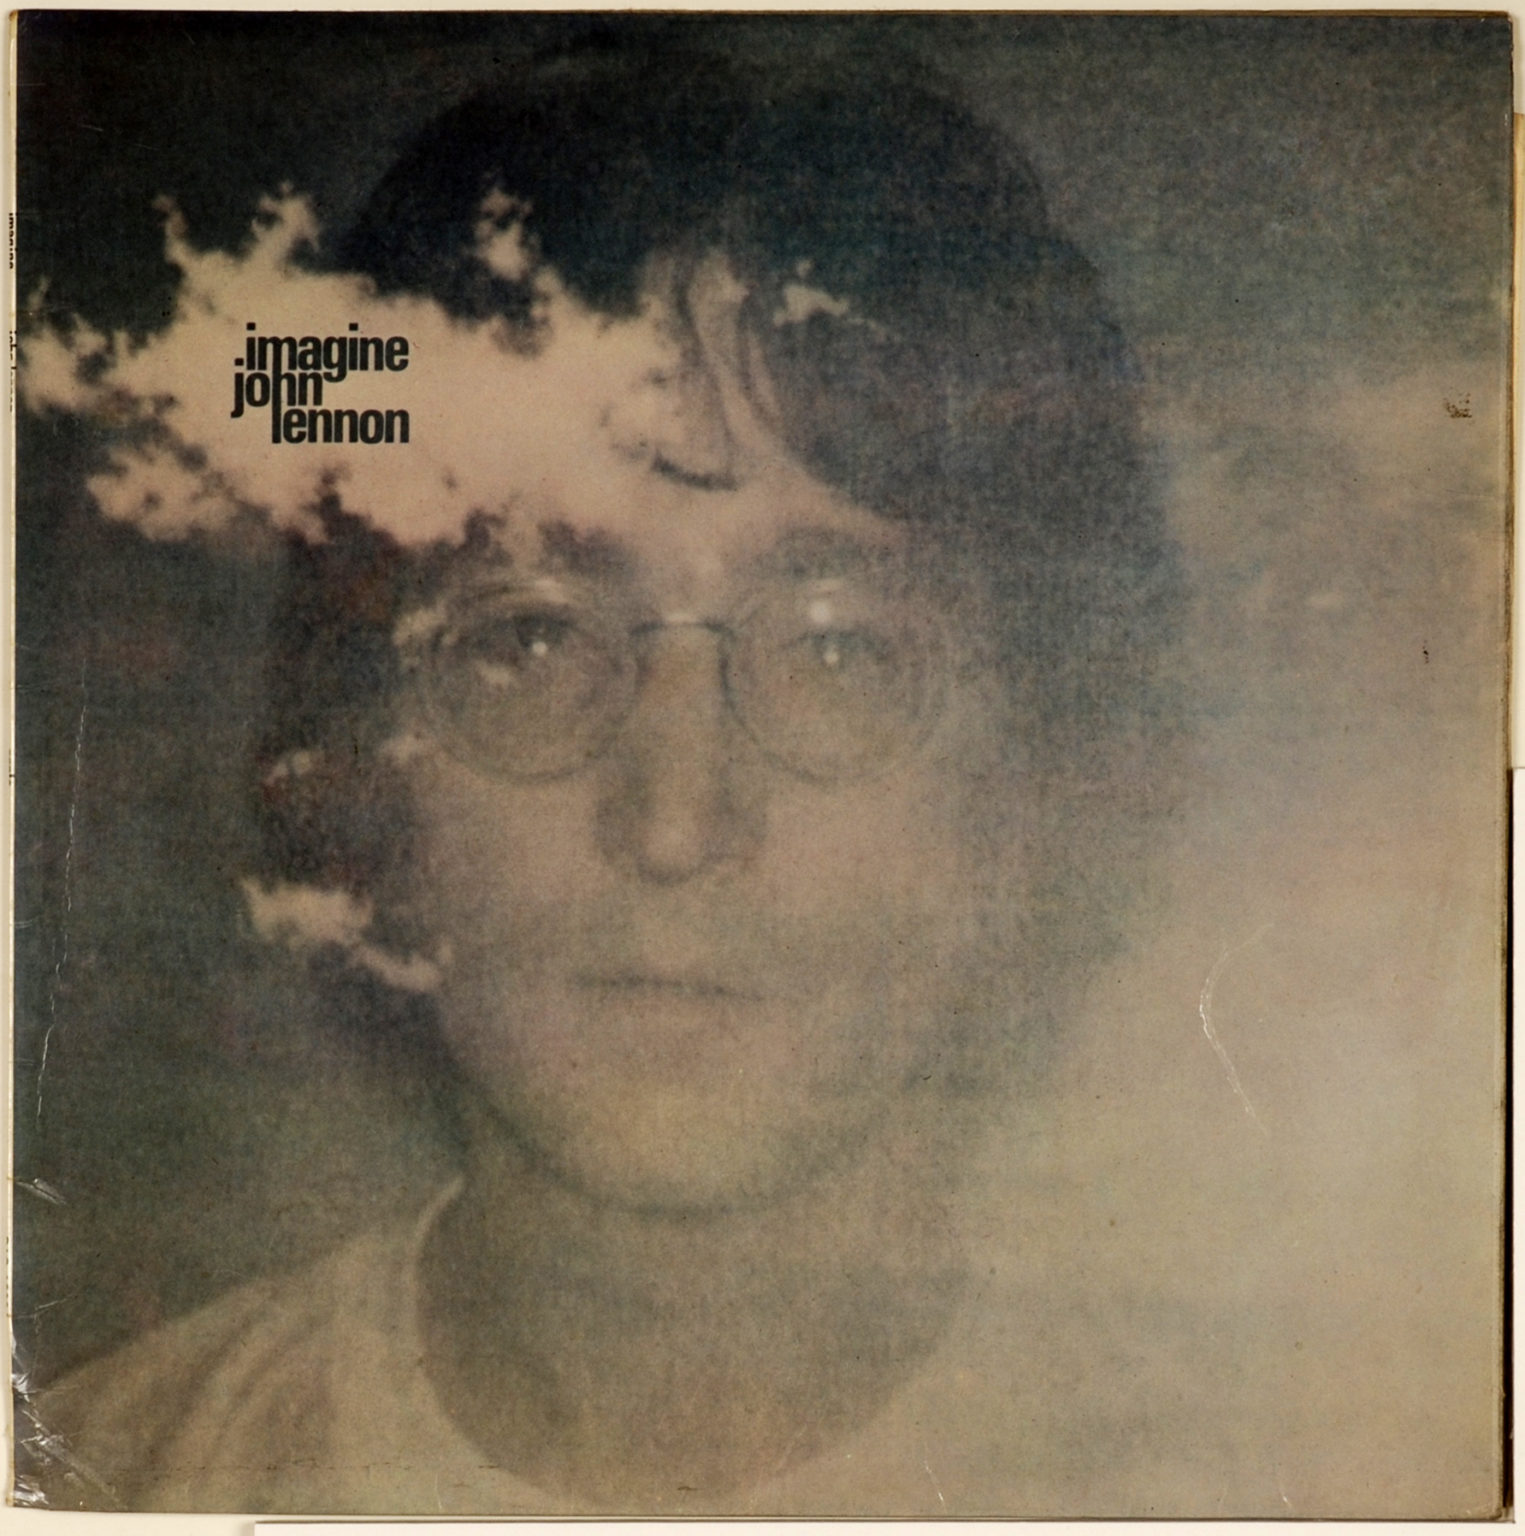 Imagine песня джона. Джон Леннон 1971. John Lennon imagine 1971. John Lennon - 1971 - imagine album. John Lennon imagine обложка.